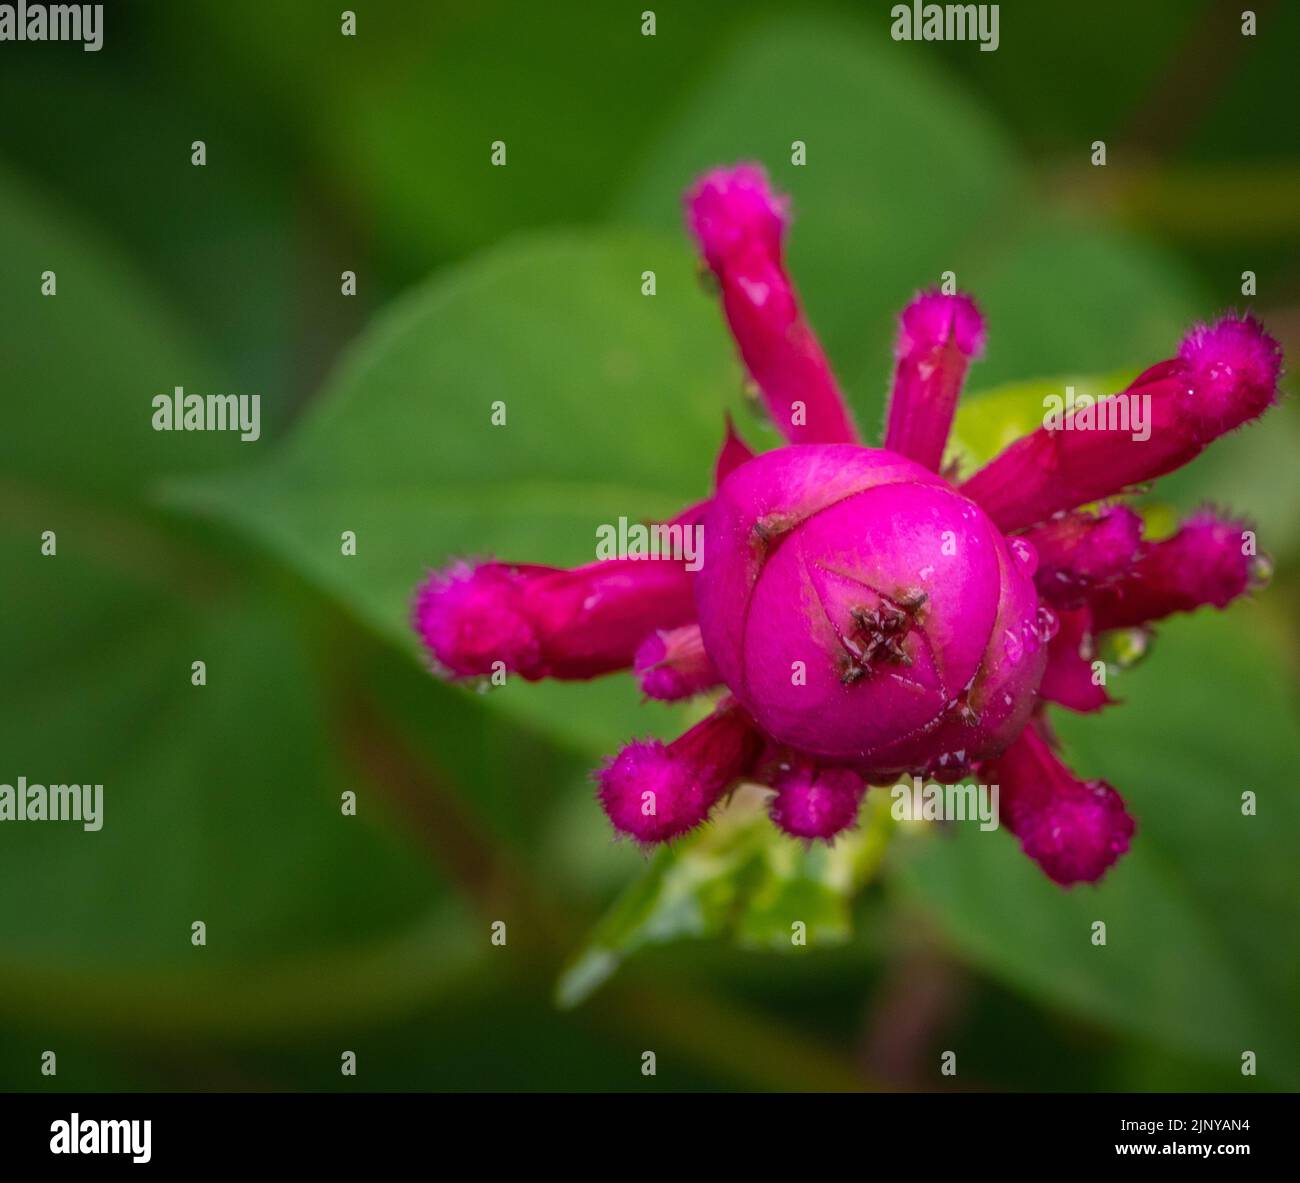 salvia involucrata boutin Blume. Roseleaf Salbei, rosa Blume. Selektiver Fokus. Salbei Mit Rosenblatt Stockfoto